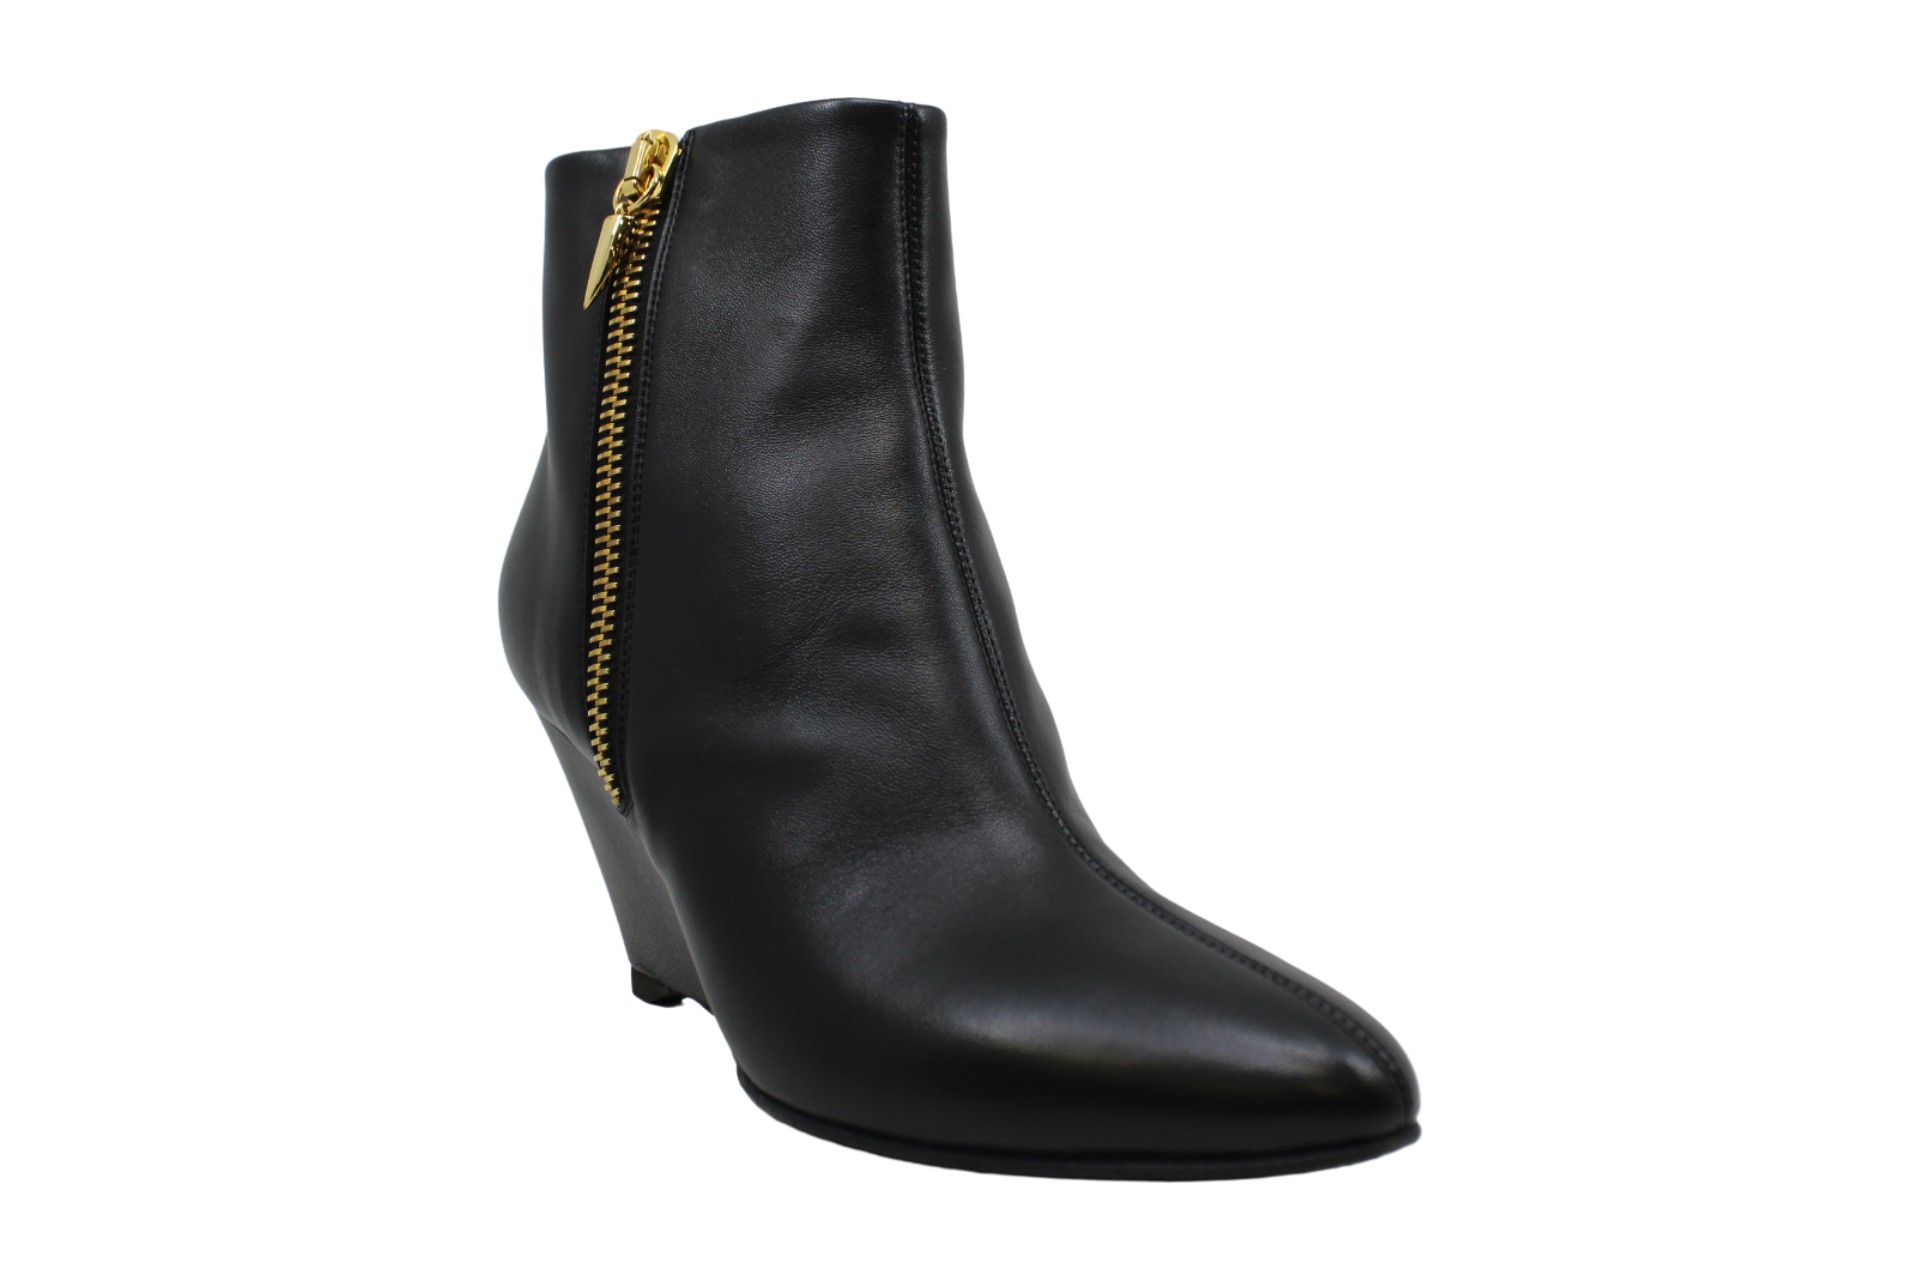 Giuseppe Zanotti Womens Boots in Black Color, Size 6.5 LXR | eBay